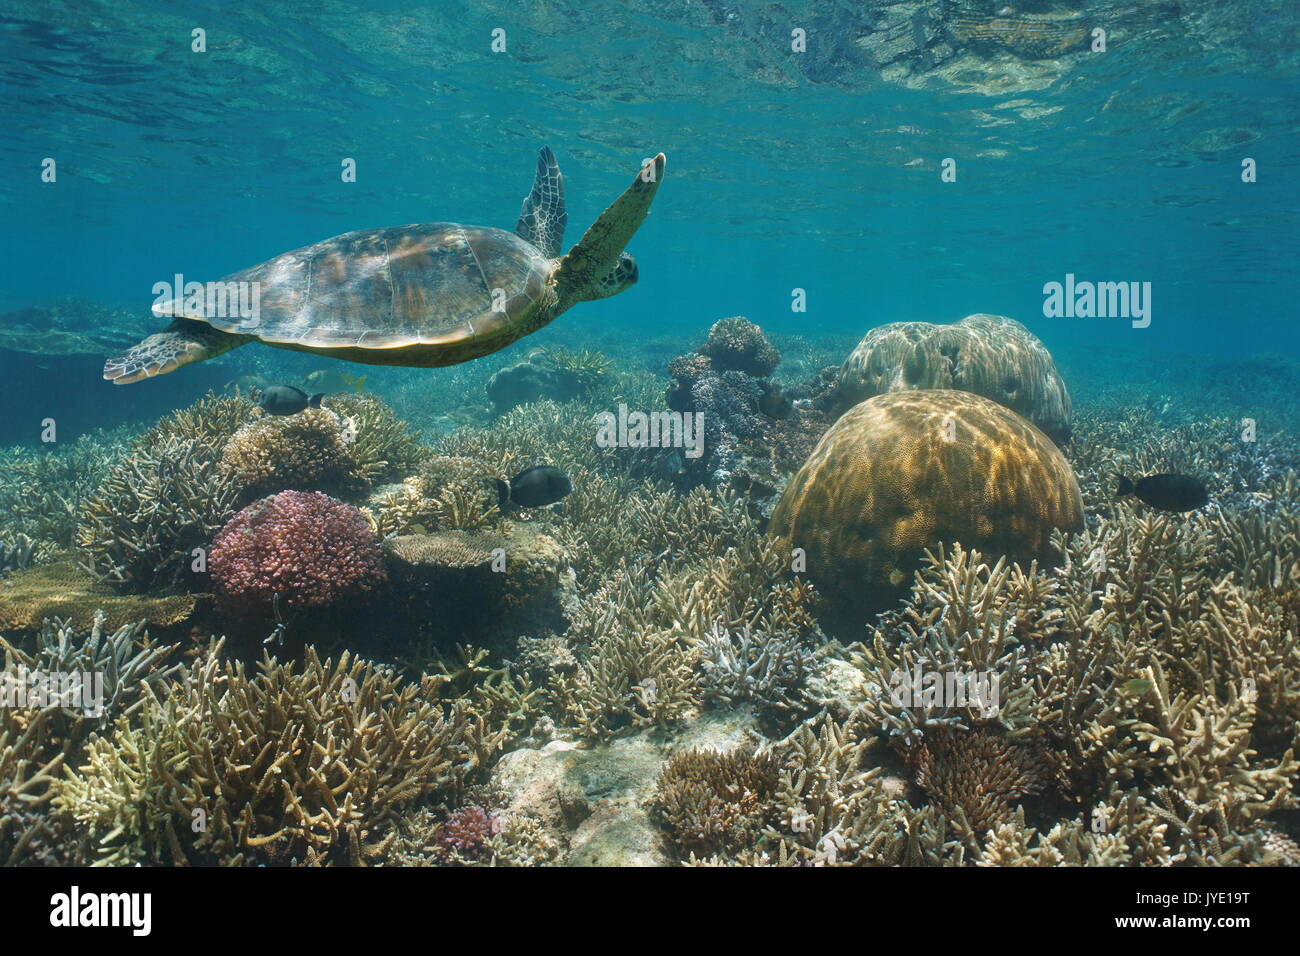 Bella barriera corallina con una tartaruga verde subacquea, oceano pacifico del sud, Nuova Caledonia Foto Stock